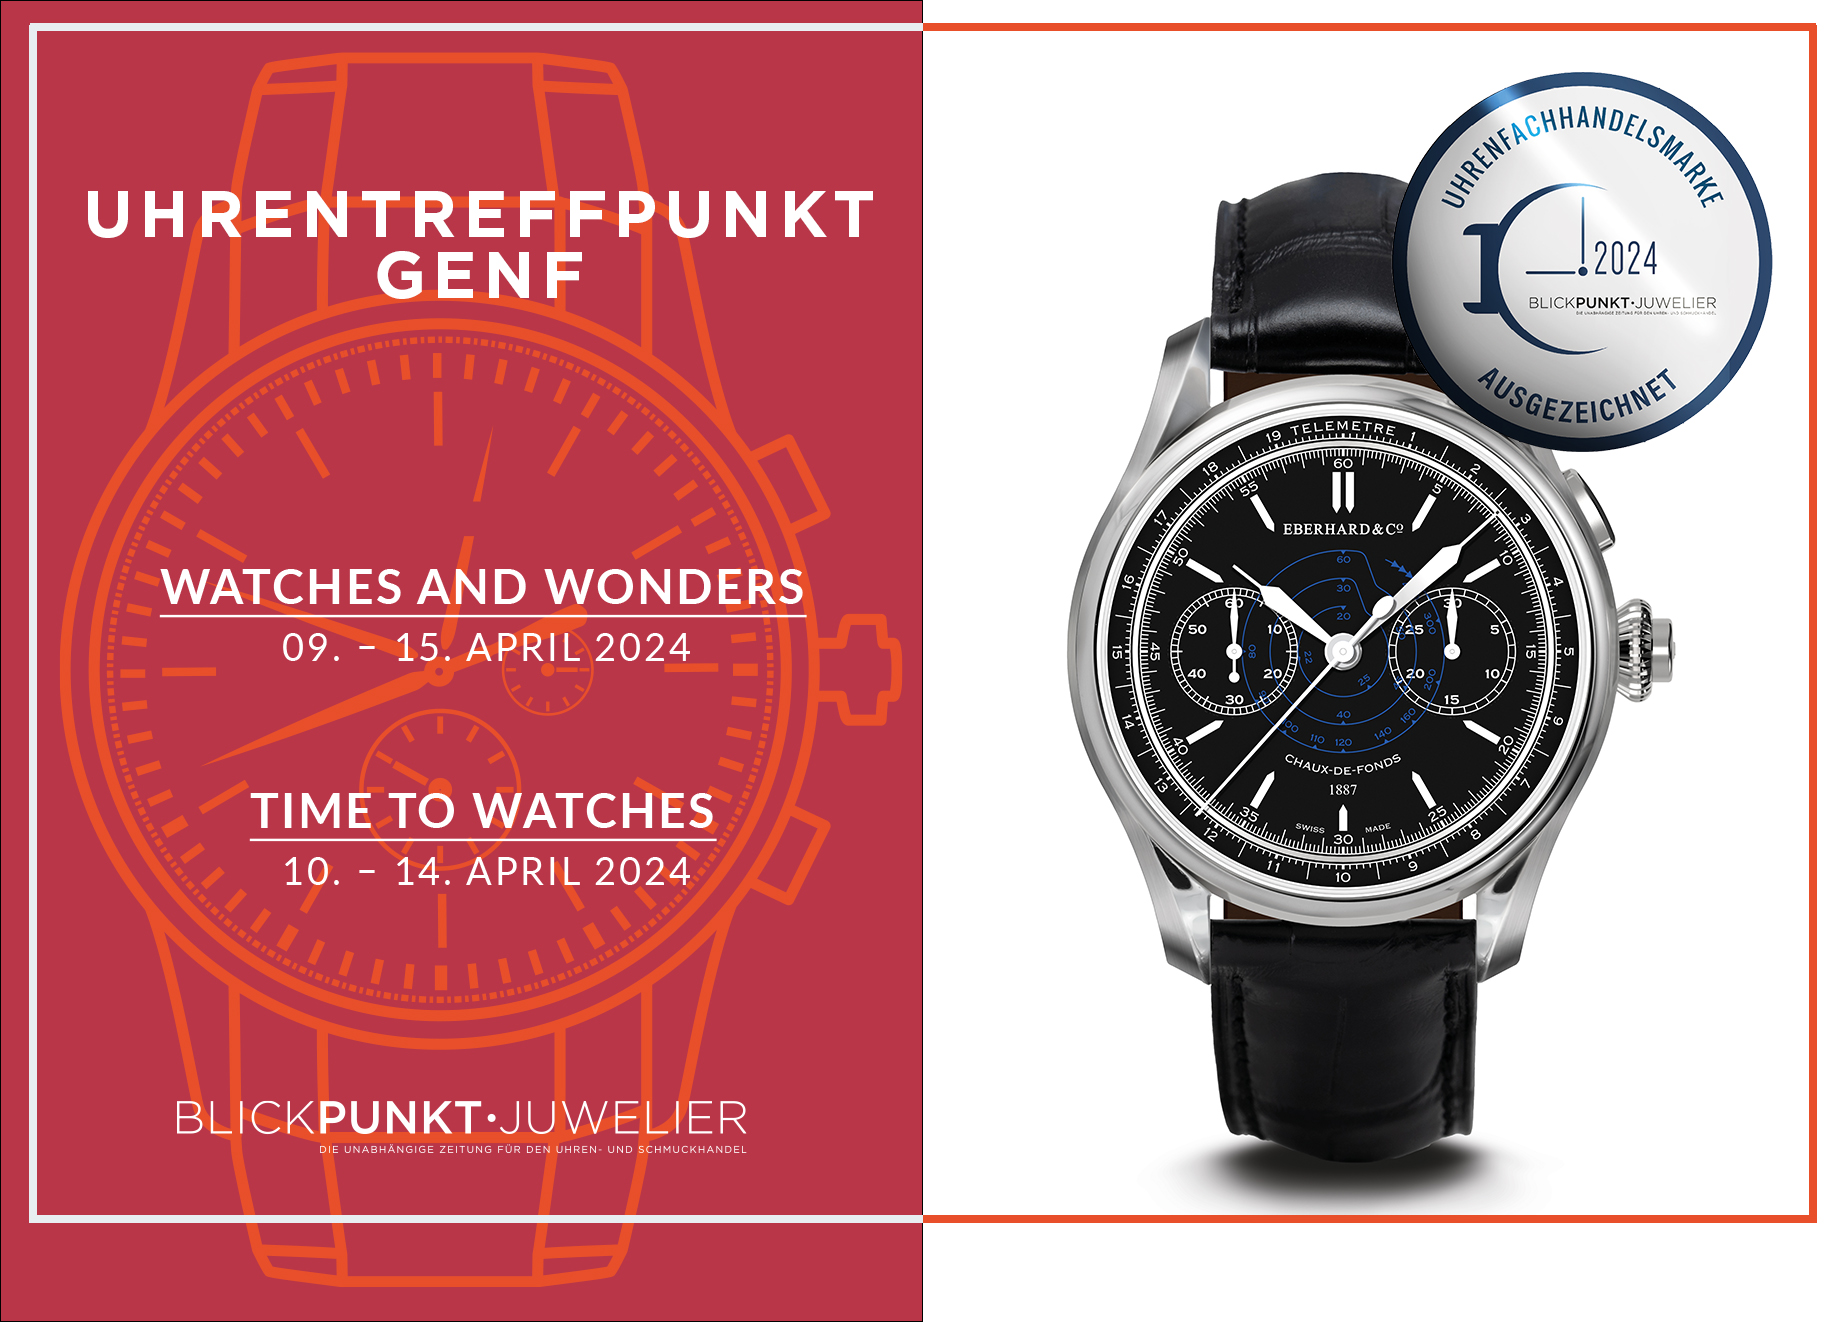 BPJ Eberhard Co Watches and Wonders Chronograph